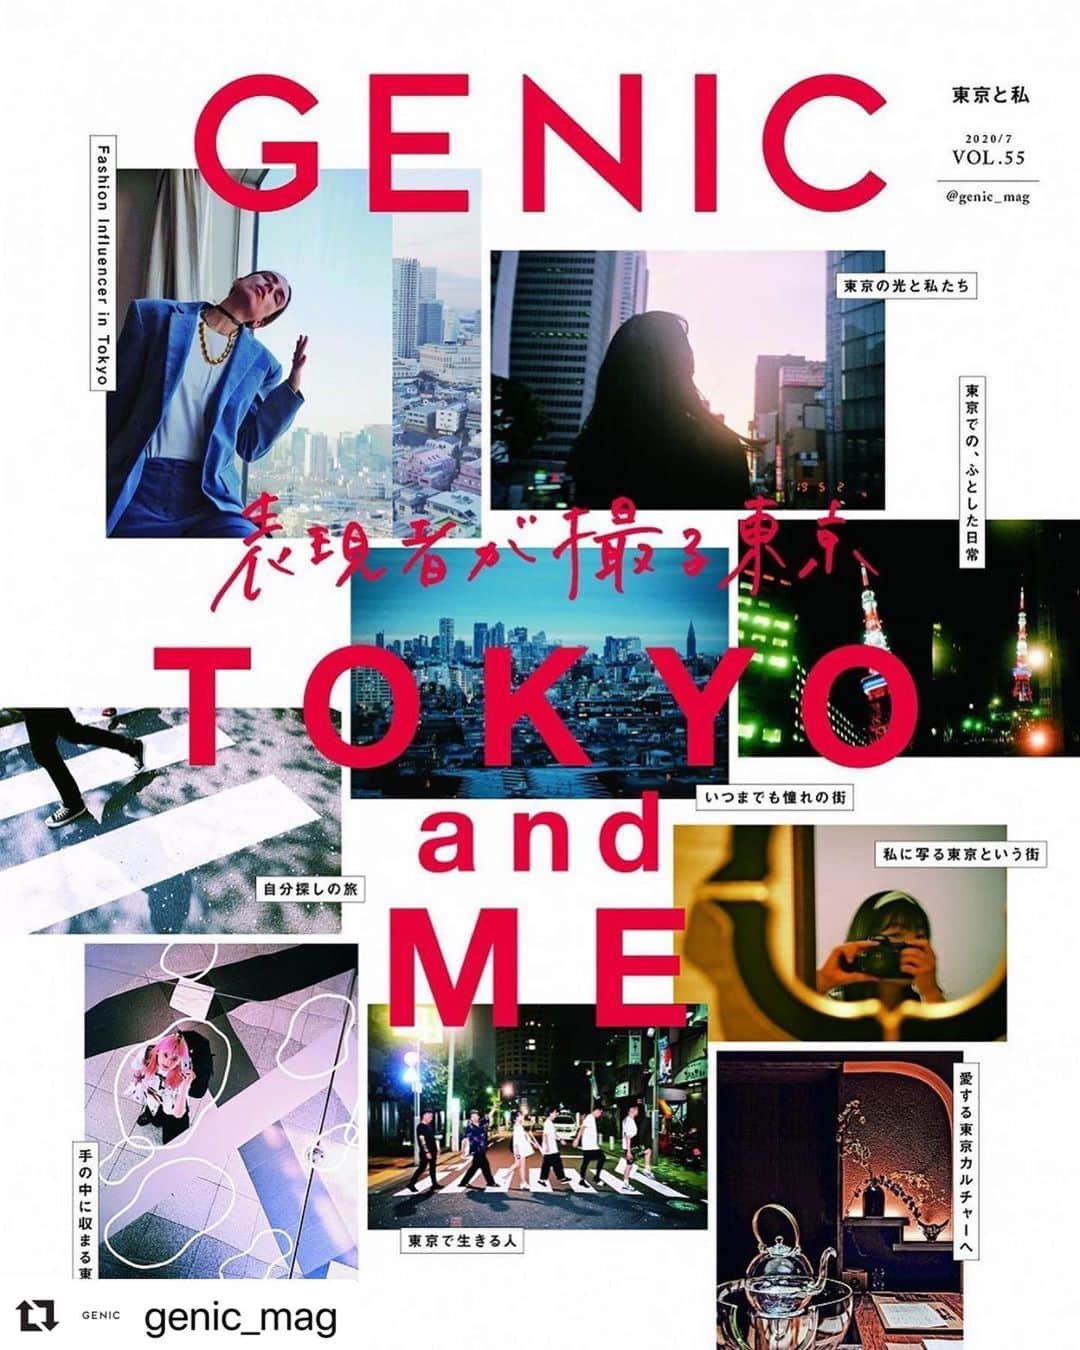 Aya（高本彩）さんのインスタグラム写真 - (Aya（高本彩）Instagram)「私が撮影した〝東京〟の写真を掲載していただきました📷発売日が楽しみです❤︎#Repost @genic_mag with @make_repost ・・・ 6月5日(金)発売！GENIC最新号についてお知らせです。﻿ ﻿ GENIC7月号は「TOKYO and ME」と題して、表現者が撮る東京にクローズアップ！﻿ 世界中のすべての街に“変わるきっかけ”が訪れている今、﻿ 東京に何を残し何を手放す？これからの東京をどう生きぬく？﻿ ﻿ その答えに近づくために、たくさんの表現者の手を借りて、いろんな角度から“東京”を紐解きました。﻿ まさに十人十色の、東京への多様な表現と想いが詰め込まれた、東京へのラブレター号です。﻿ ﻿ 小関裕太 @kotobanoamarinaitokoro @yuta_koseki_68 の新連載、﻿ "小関裕太の自分探しの旅「スキ」"にも注目です！﻿ ﻿ Amazonの予約も受付中！﻿ プロフィール欄のリンクからチェックしてください☑︎﻿ ﻿ まずは特集・企画と、出演者をご紹介！﻿ ﻿ ------------------------------------﻿ 【特集1】 TOKYO and ME ﻿ ﻿ ■表現者が撮る東京﻿ 出演： Dream Aya、龍崎翔子、富田望生、はましゃか、中田みのり、嵐田大志、6151、コハラタケル、葵、見津賢、平岡雄太、もろんのん、i_dauyu、東京猫色、清水文太﻿ @aya_dream04　@shokoryuzaki　@tomitamiu　@shakachang　@minori_nakada　@taishi_arashida　@6151　@takerukohara_sono1 @aoii6327　@mitsusatoshi　@fukulow_photo　@moron_non　@i_dauyu　@bunta.r ﻿ ﻿ ■ 女性写真家が切り取る東京﻿ 出演：小林真梨子、南阿沙美、ヨシノハナ﻿ @marinko5589　@a_chan_minami　@appl__e____ ﻿ ﻿ ■Good Home with TOKYO生きる場所と暮らす場所﻿ 出演：伊佐知美、古性のち﻿ @tomomi_isa　@nocci_trip﻿ ﻿ ■文筆家・塩谷舞コラム：愛する東京カルチャーへ﻿ @ciotan﻿ ﻿ ■アナウンサー・弘中綾香Specialコラム：手に届きそうで届かない東京﻿ @hironaka_ayaka﻿ ﻿ ■出演者に聞いた"東京"についてのアレコレ﻿ ﻿ ■ファッショニスタの背景に写る東京﻿ ﻿ 【特集２】Internet Radio!「音声配信プラットフォームがキテる！」﻿ ------------------------------------﻿ 読み応えたっぷりの1冊が出来あがりました！東京に対する様々な「表現」を、どうぞ楽しみにご覧ください。﻿ 予約は、プロフィール欄のリンクから！」5月29日 23時35分 - aya_dream04